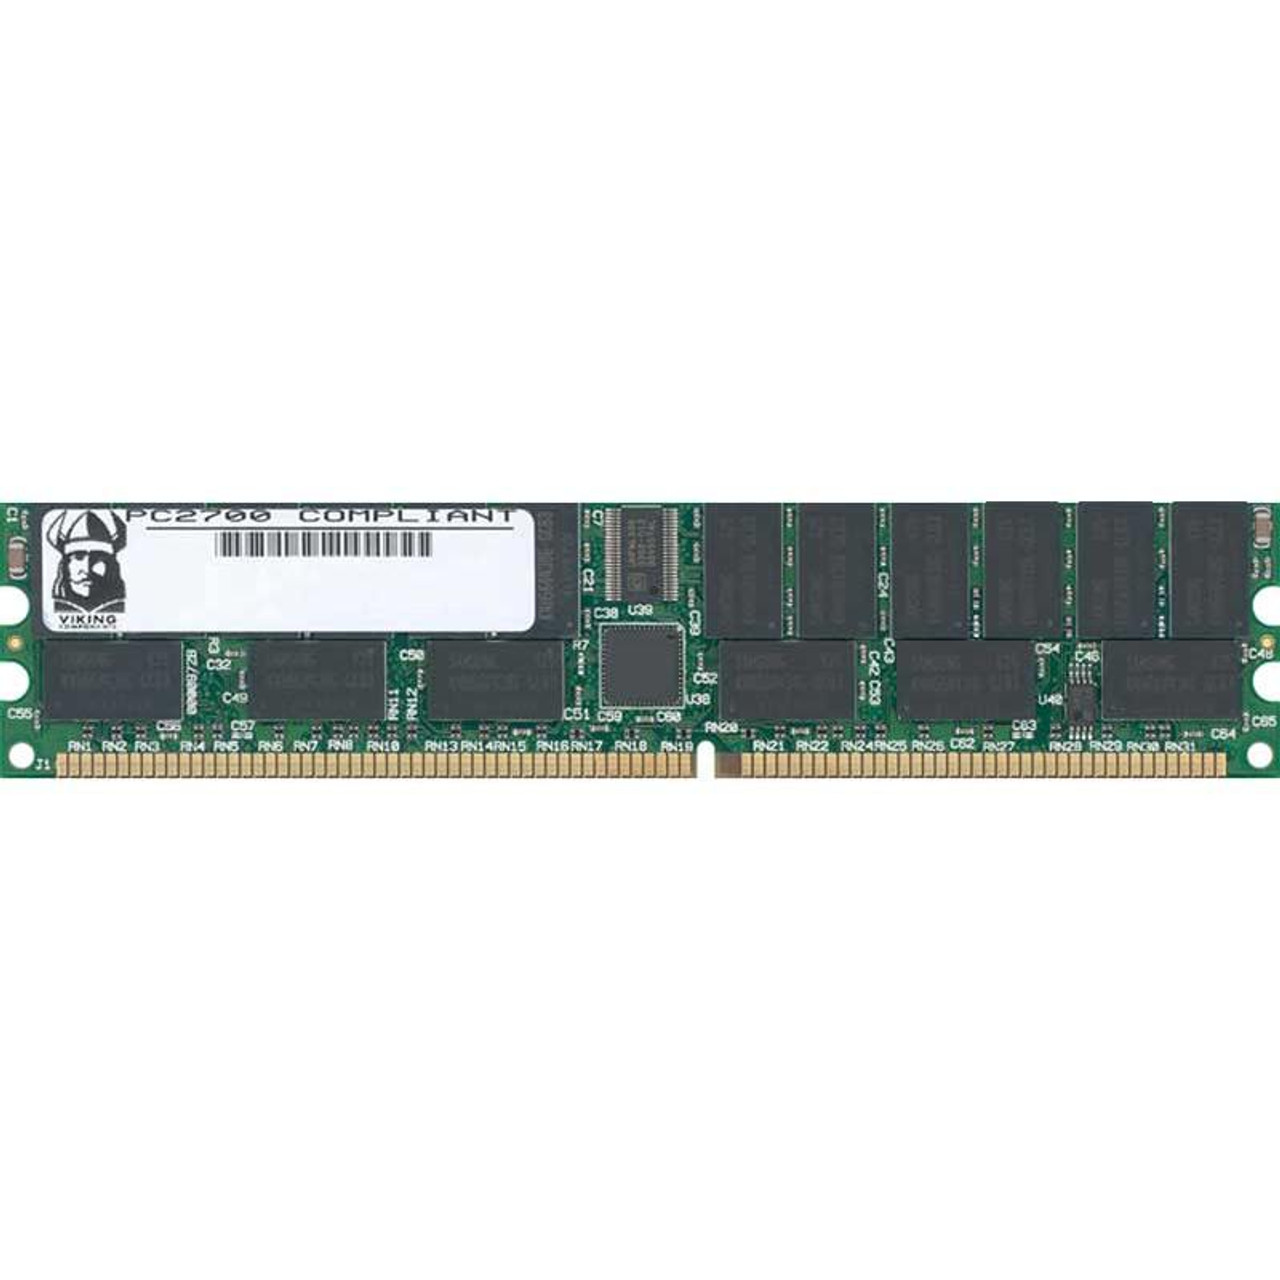 GI2100RDDR/512 Viking 512MB PC2100 DDR-266MHz Registered ECC CL2.5 184-Pin DIMM 2.5V Memory Module